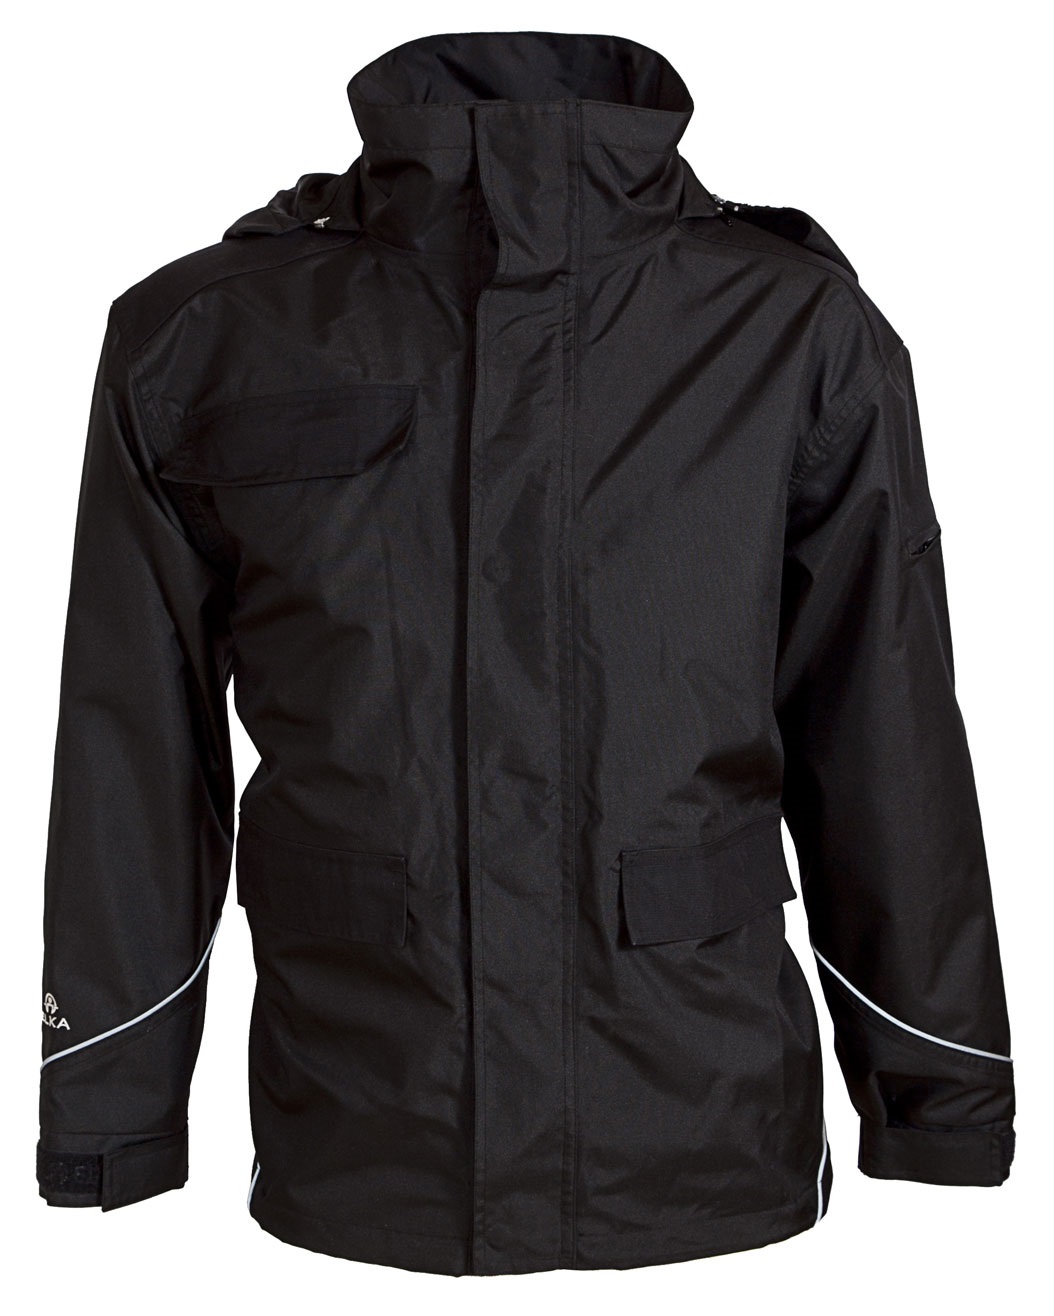 ELKA-Regenschutz, -Regen-Nässe-Wetter-Schutz-Jacke, WORKING XTREME, schwarz